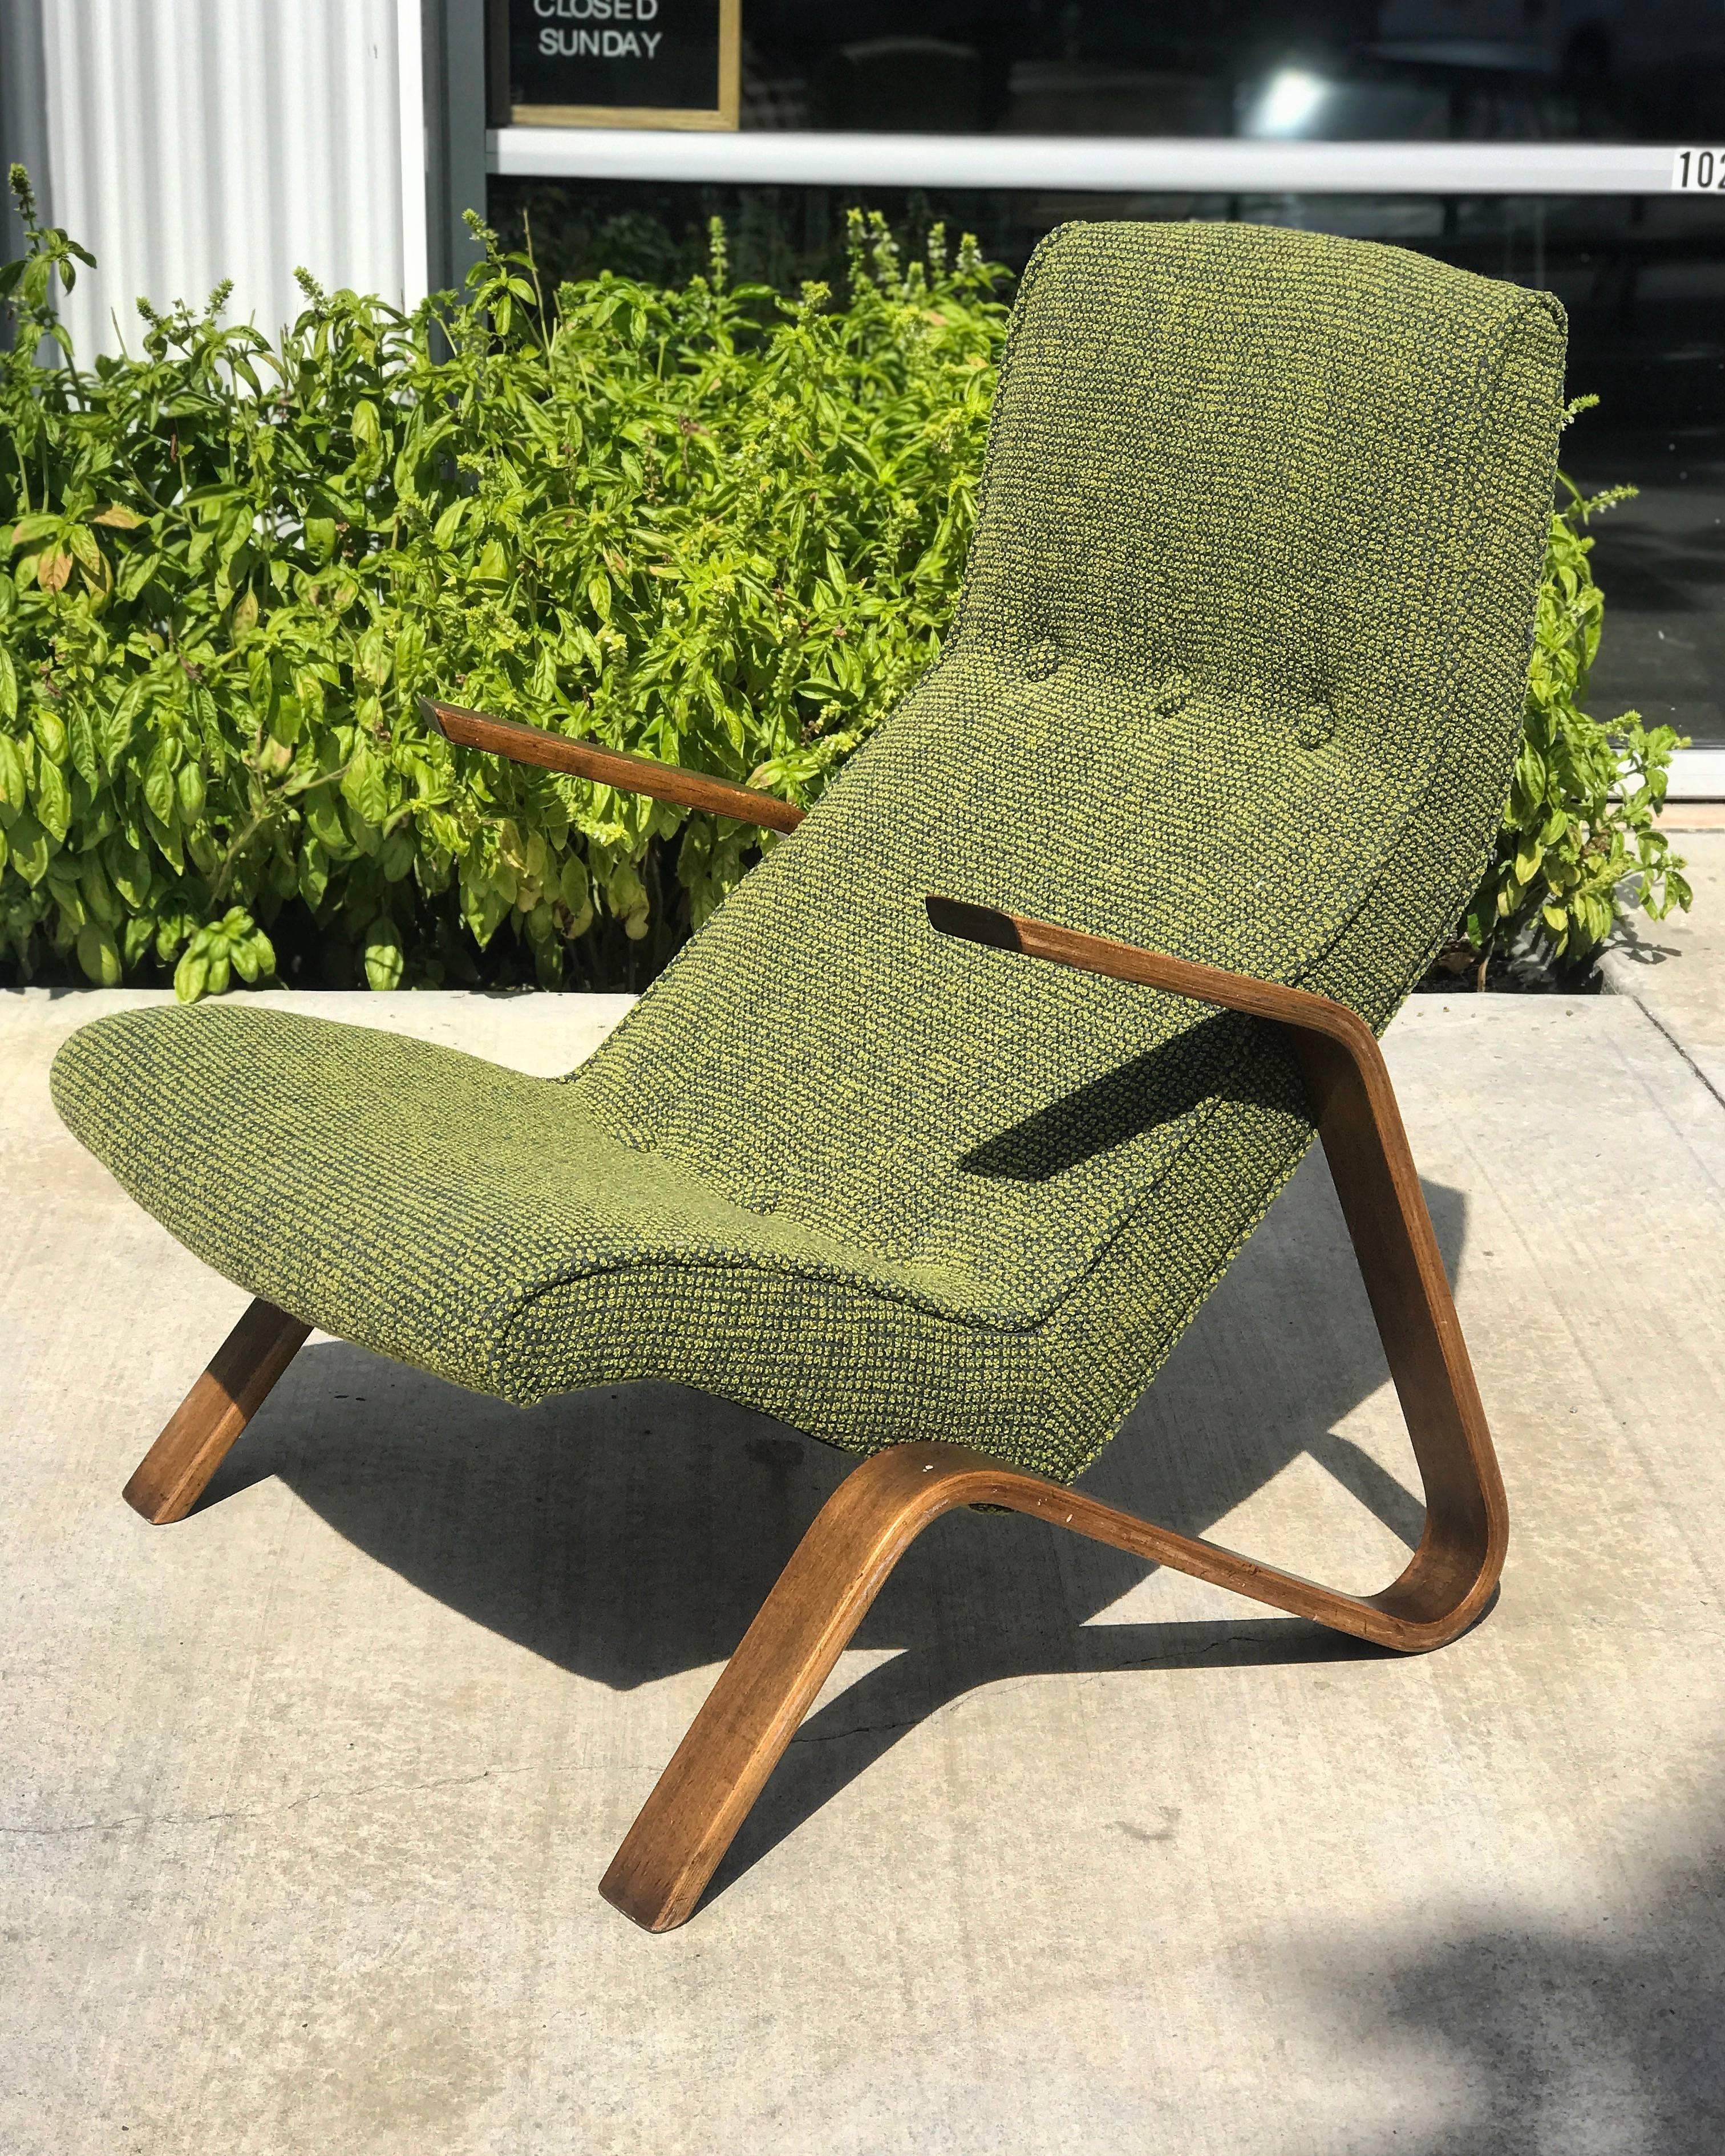 Stunning vintage Eero Saarinen grasshopper chair 
in amazing condition 
Upholstered in Maharam textile.
 